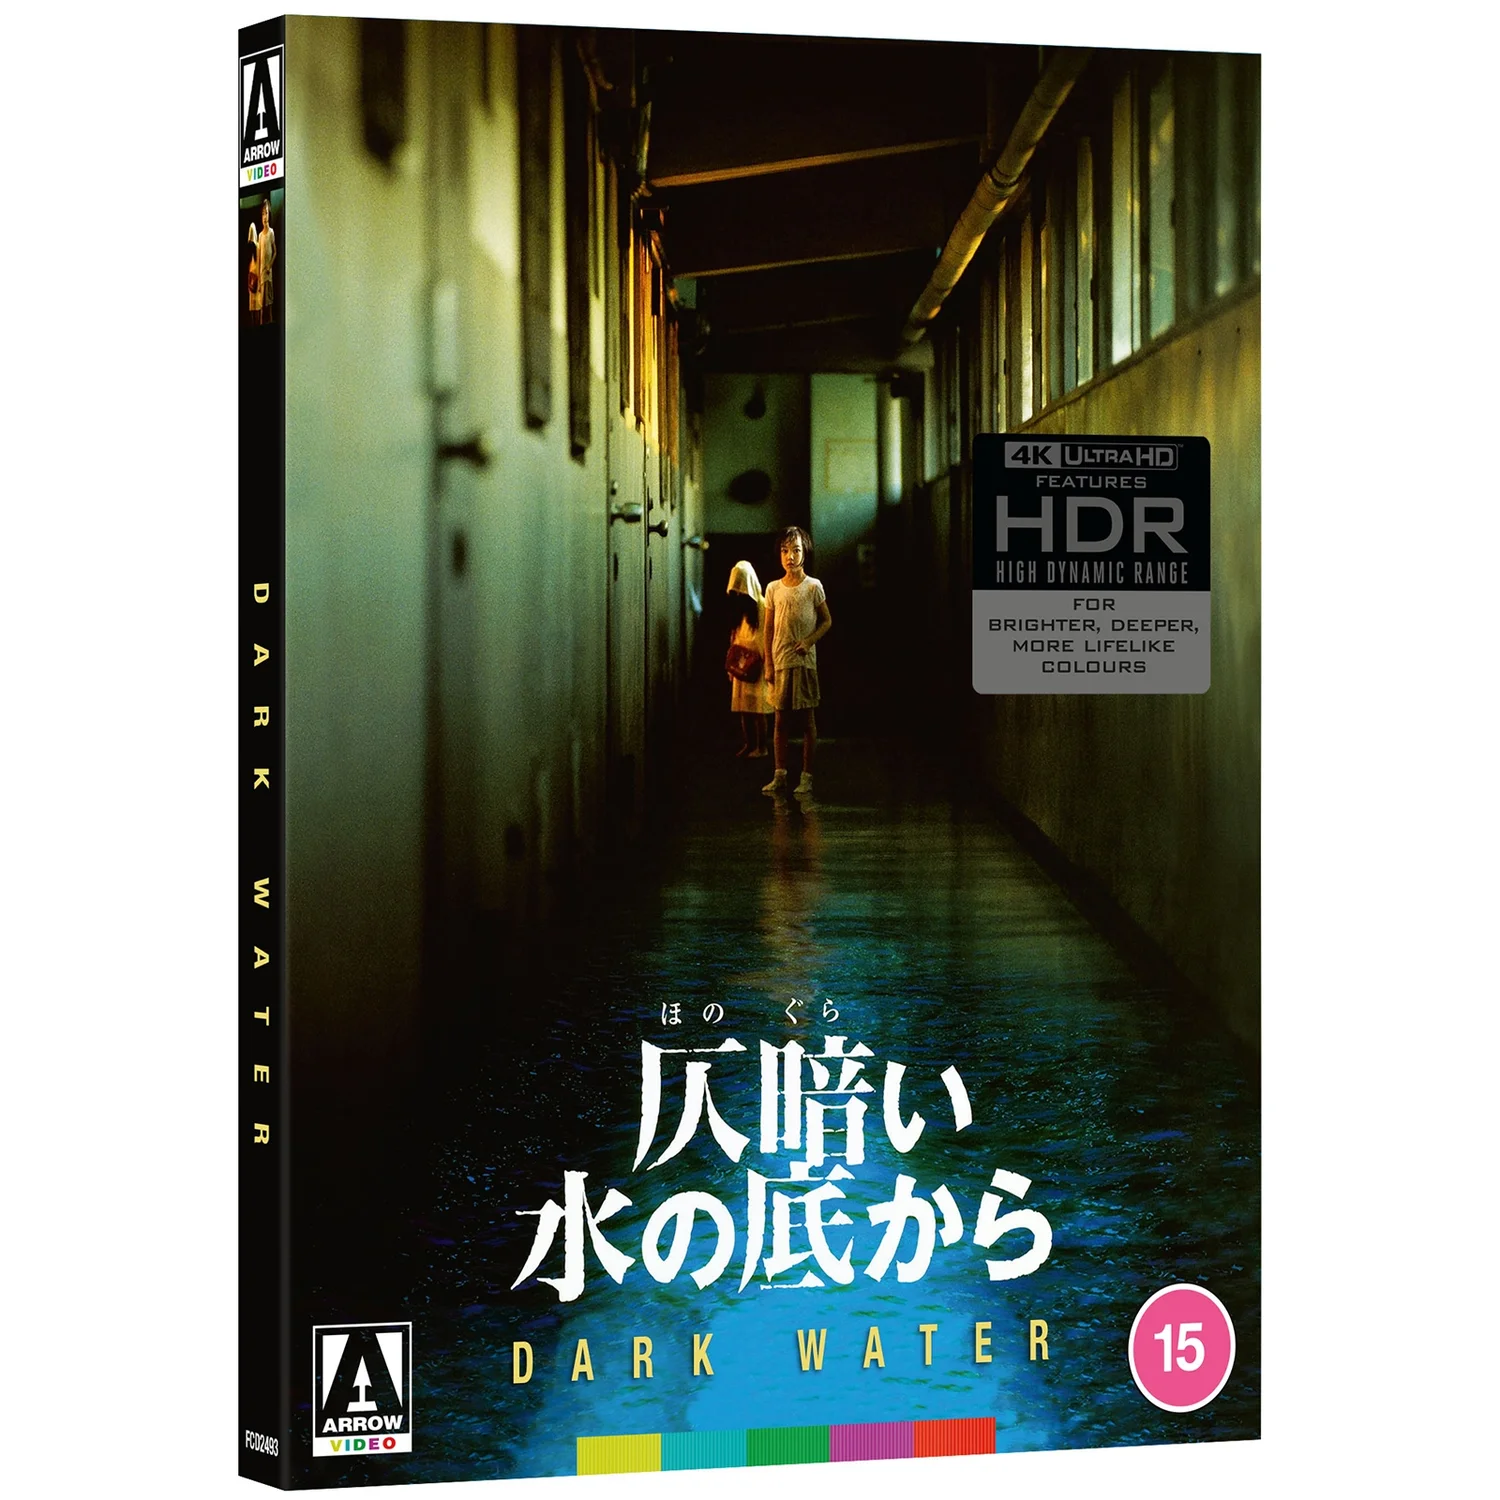 Dark Water 4K UHD Release Date Revealed for J-Horror Classic